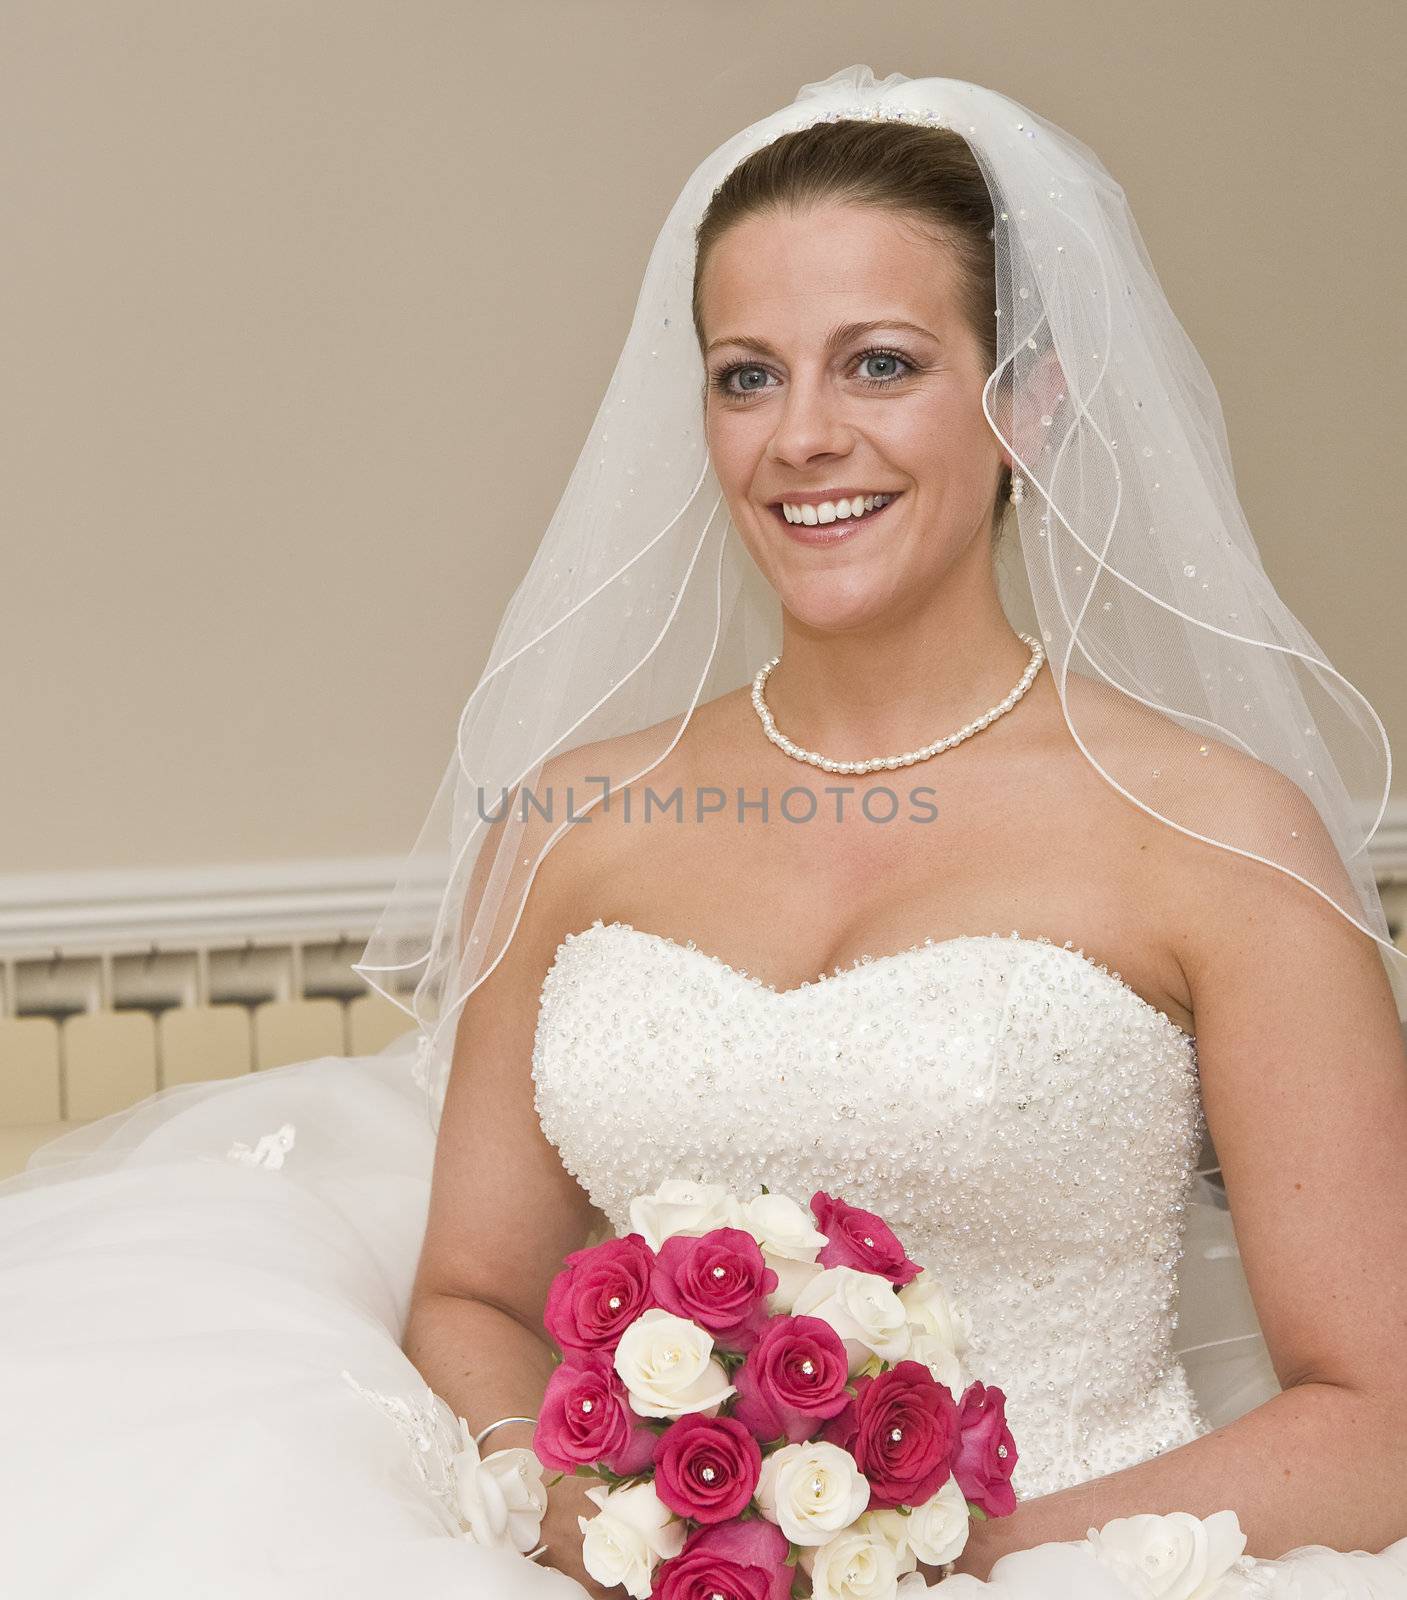 Beautiful young bride formal portrait